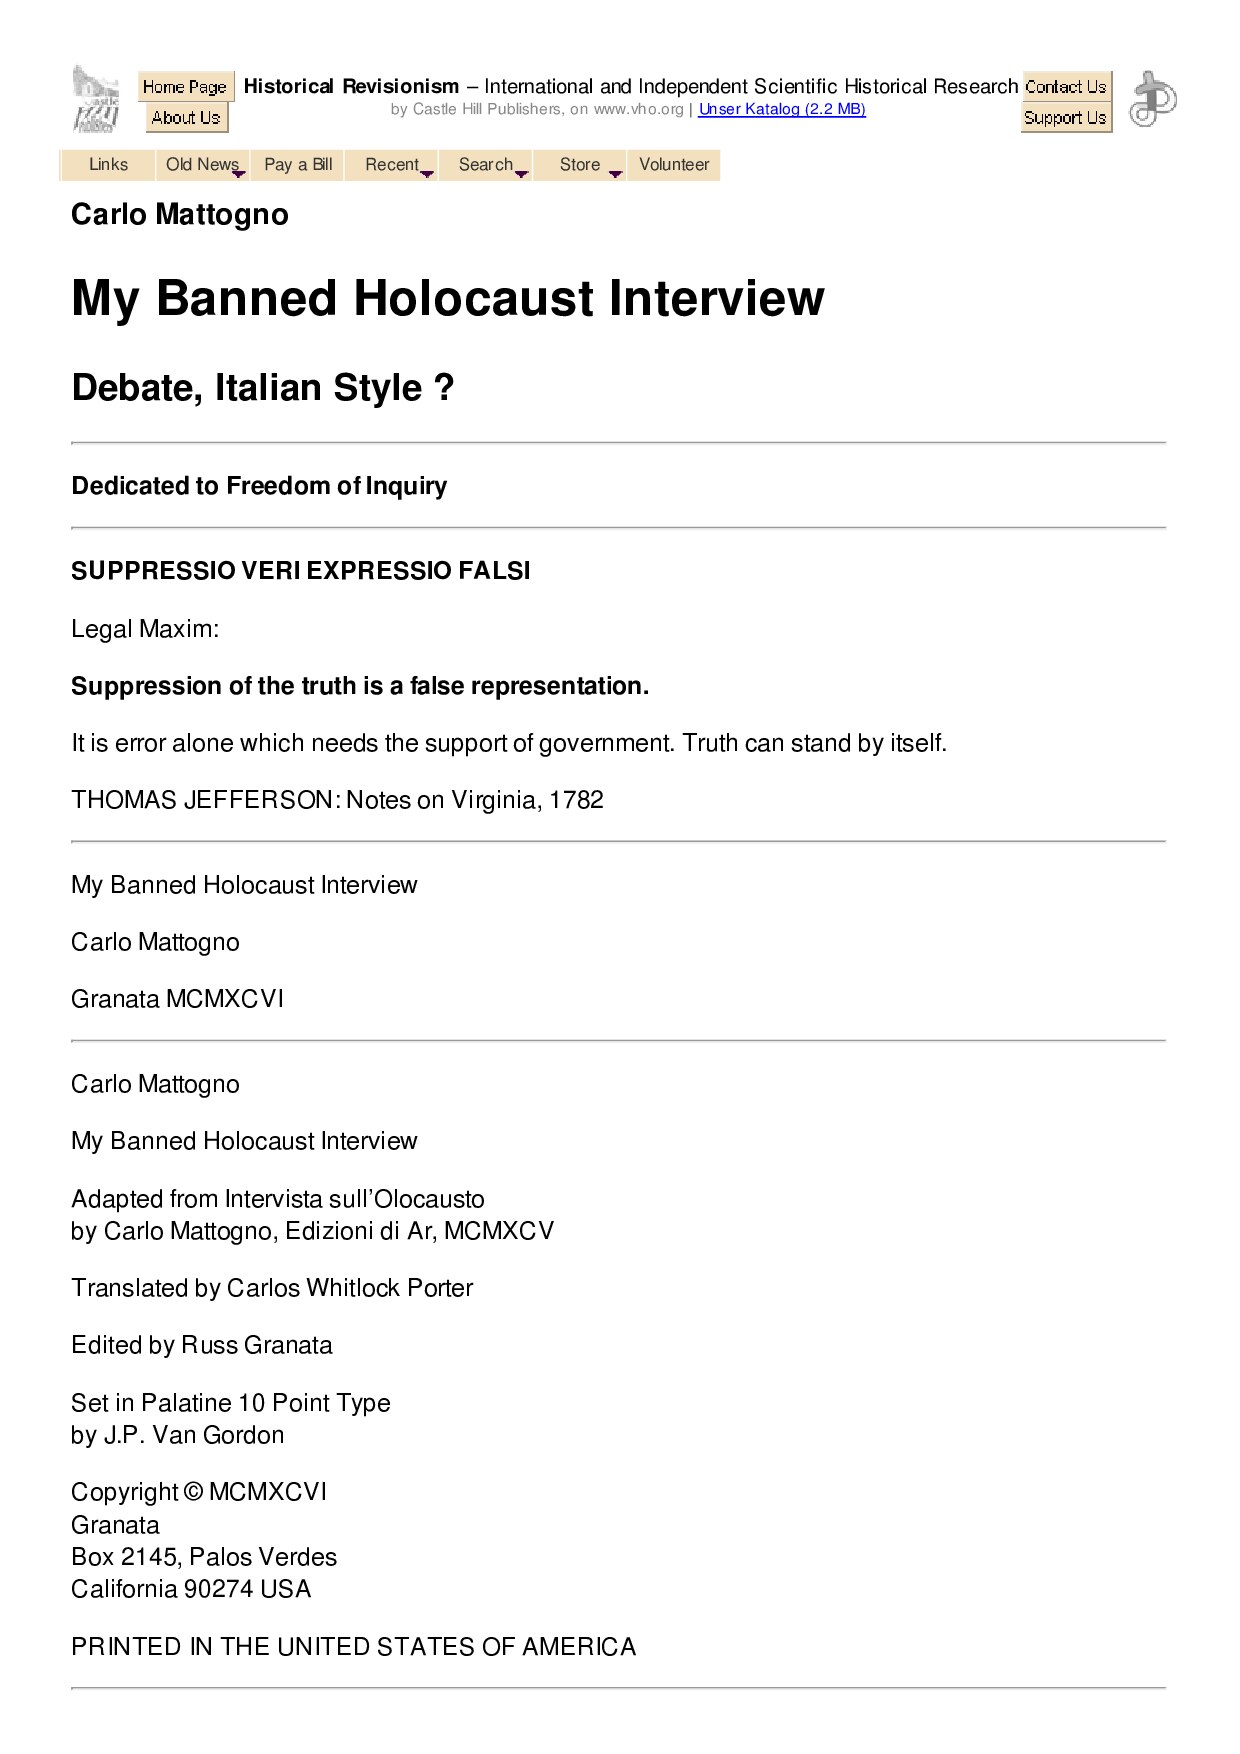 Carlo Mattogno: My banned Holocaust Interview - Debate, Italian Style?